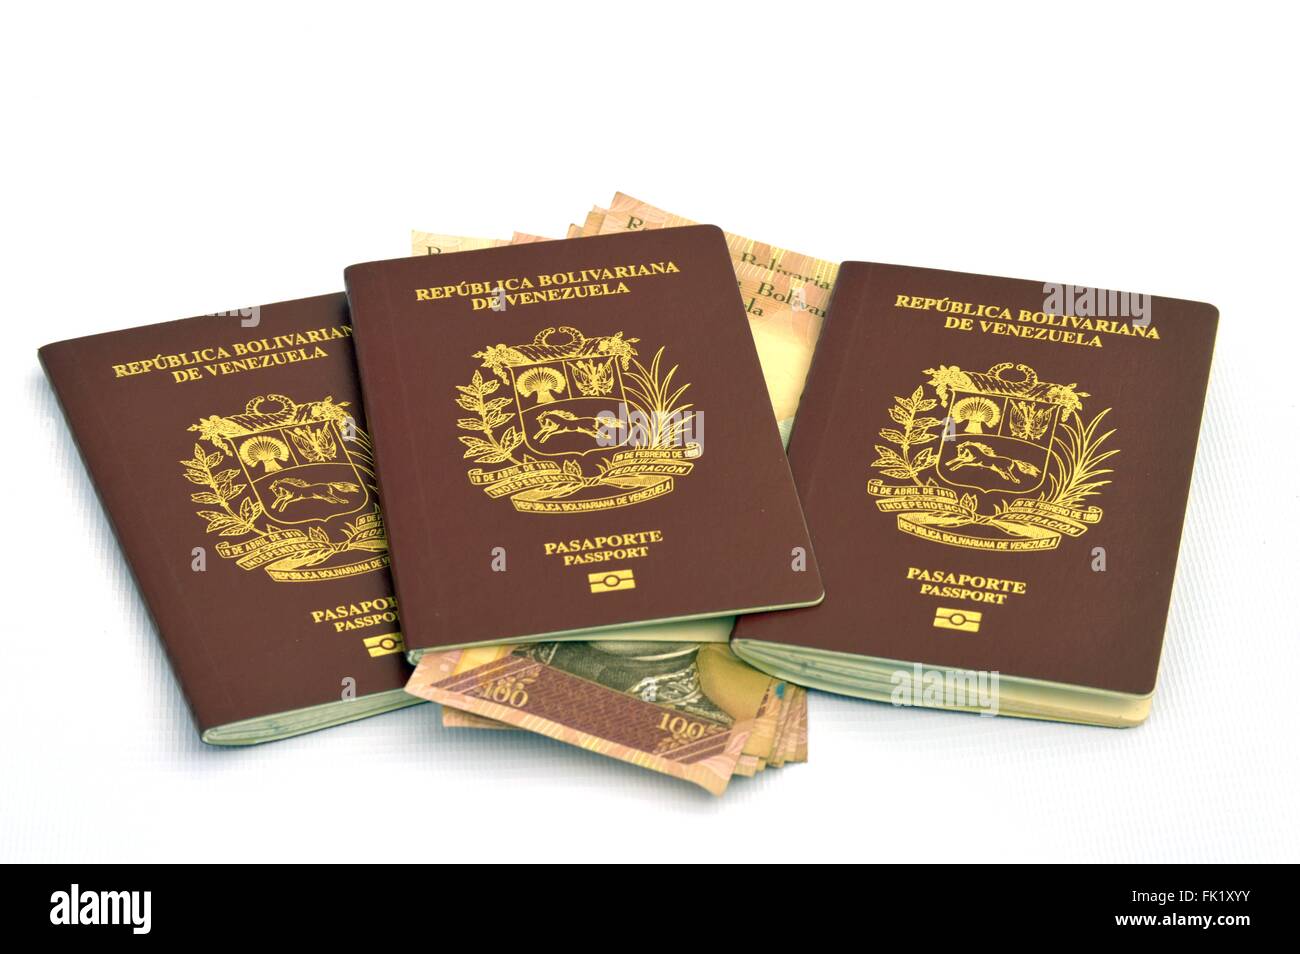 Venezuelan passports and bank notes Stock Photo